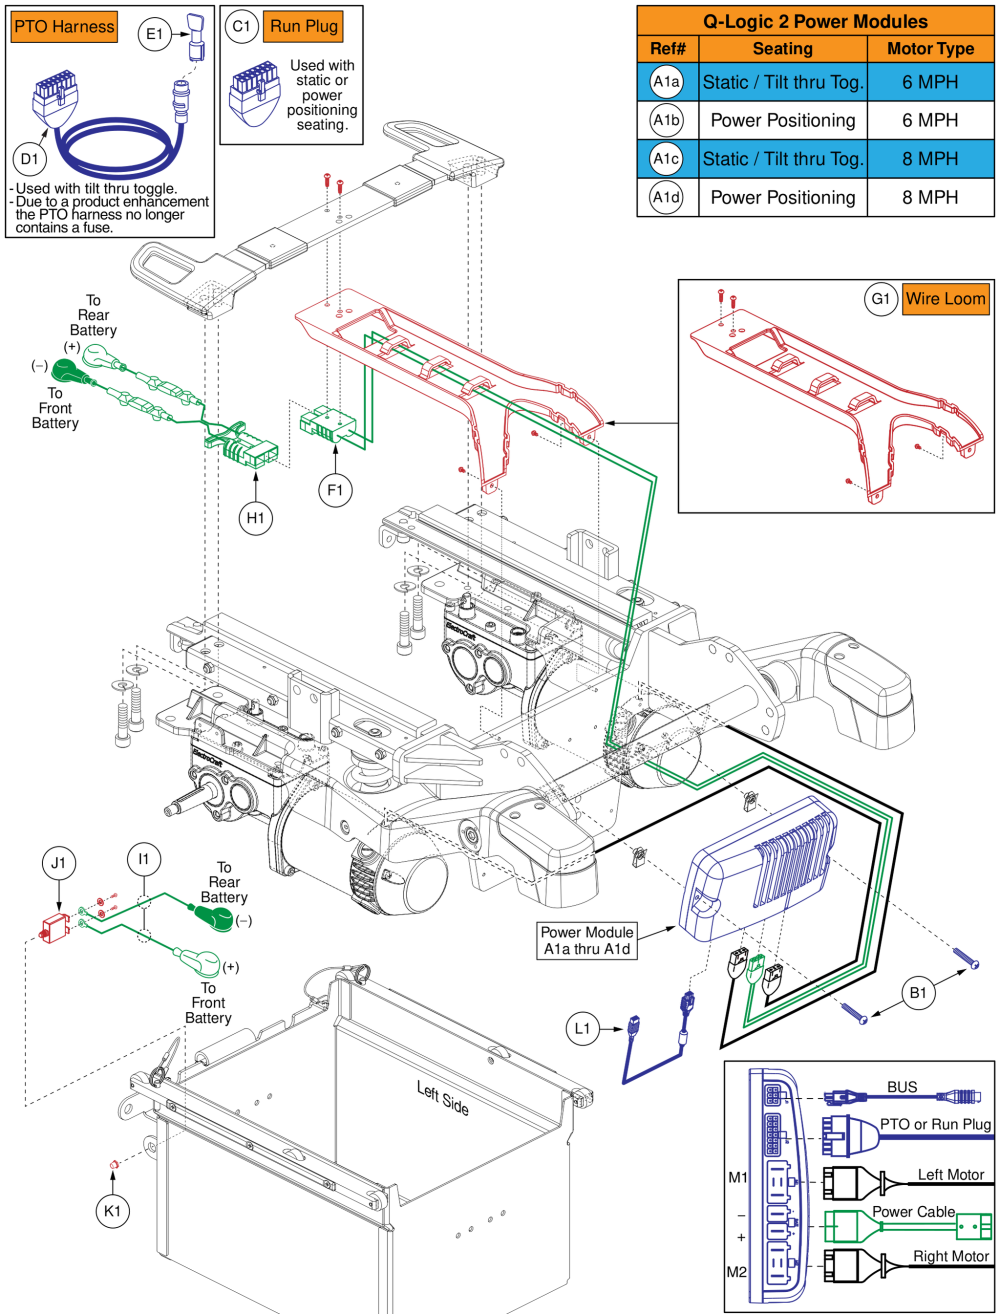 Q-logic 2 Power Modules & Harnesses, Standard Motors, Rival (r44) parts diagram